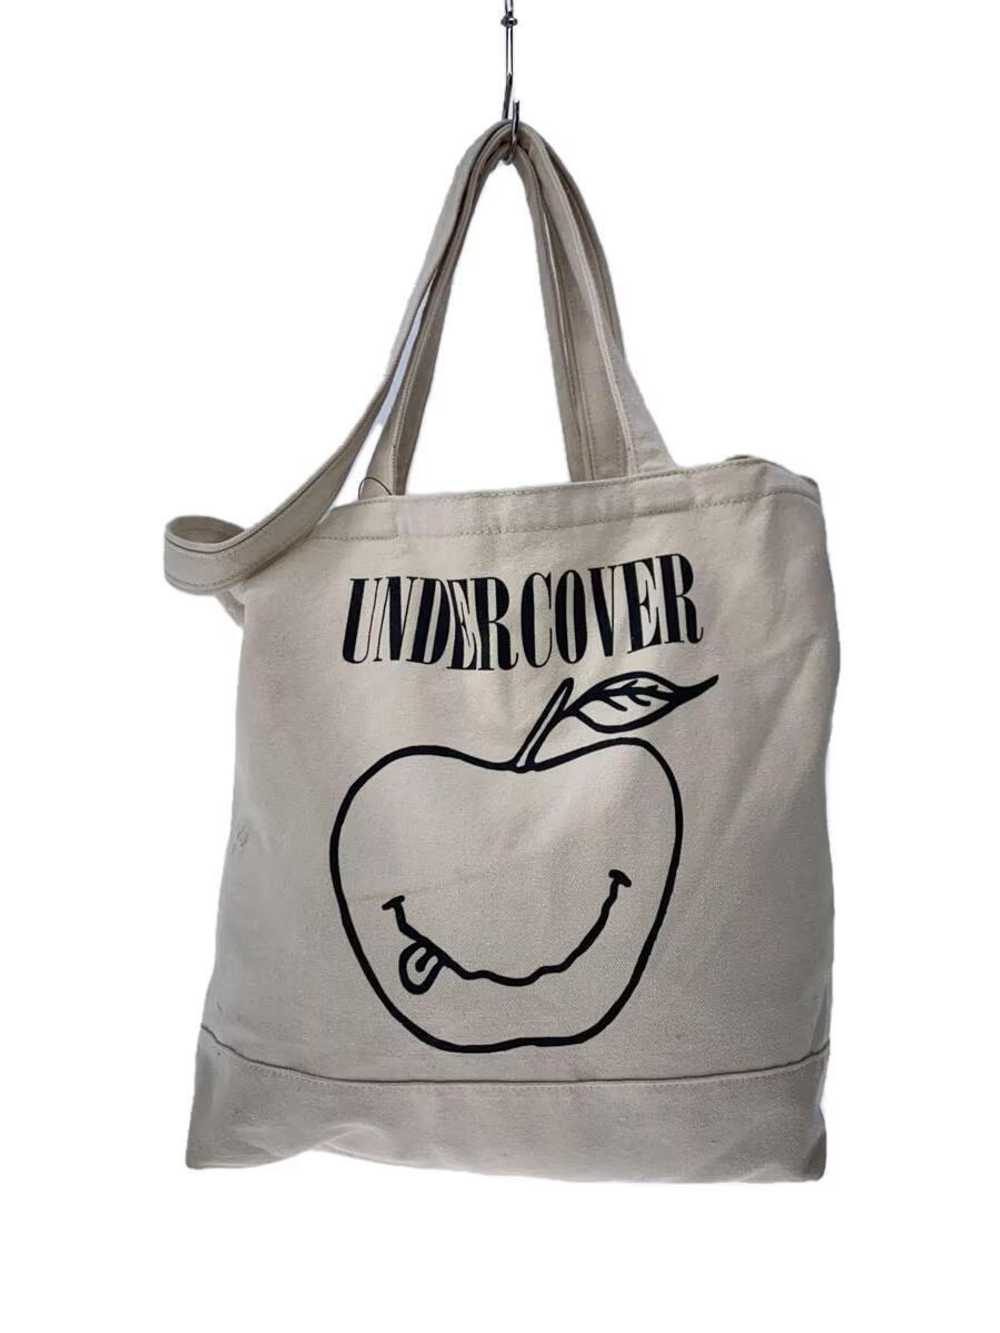 Undercover Nirvana Apple Logo Tote Bag - image 1